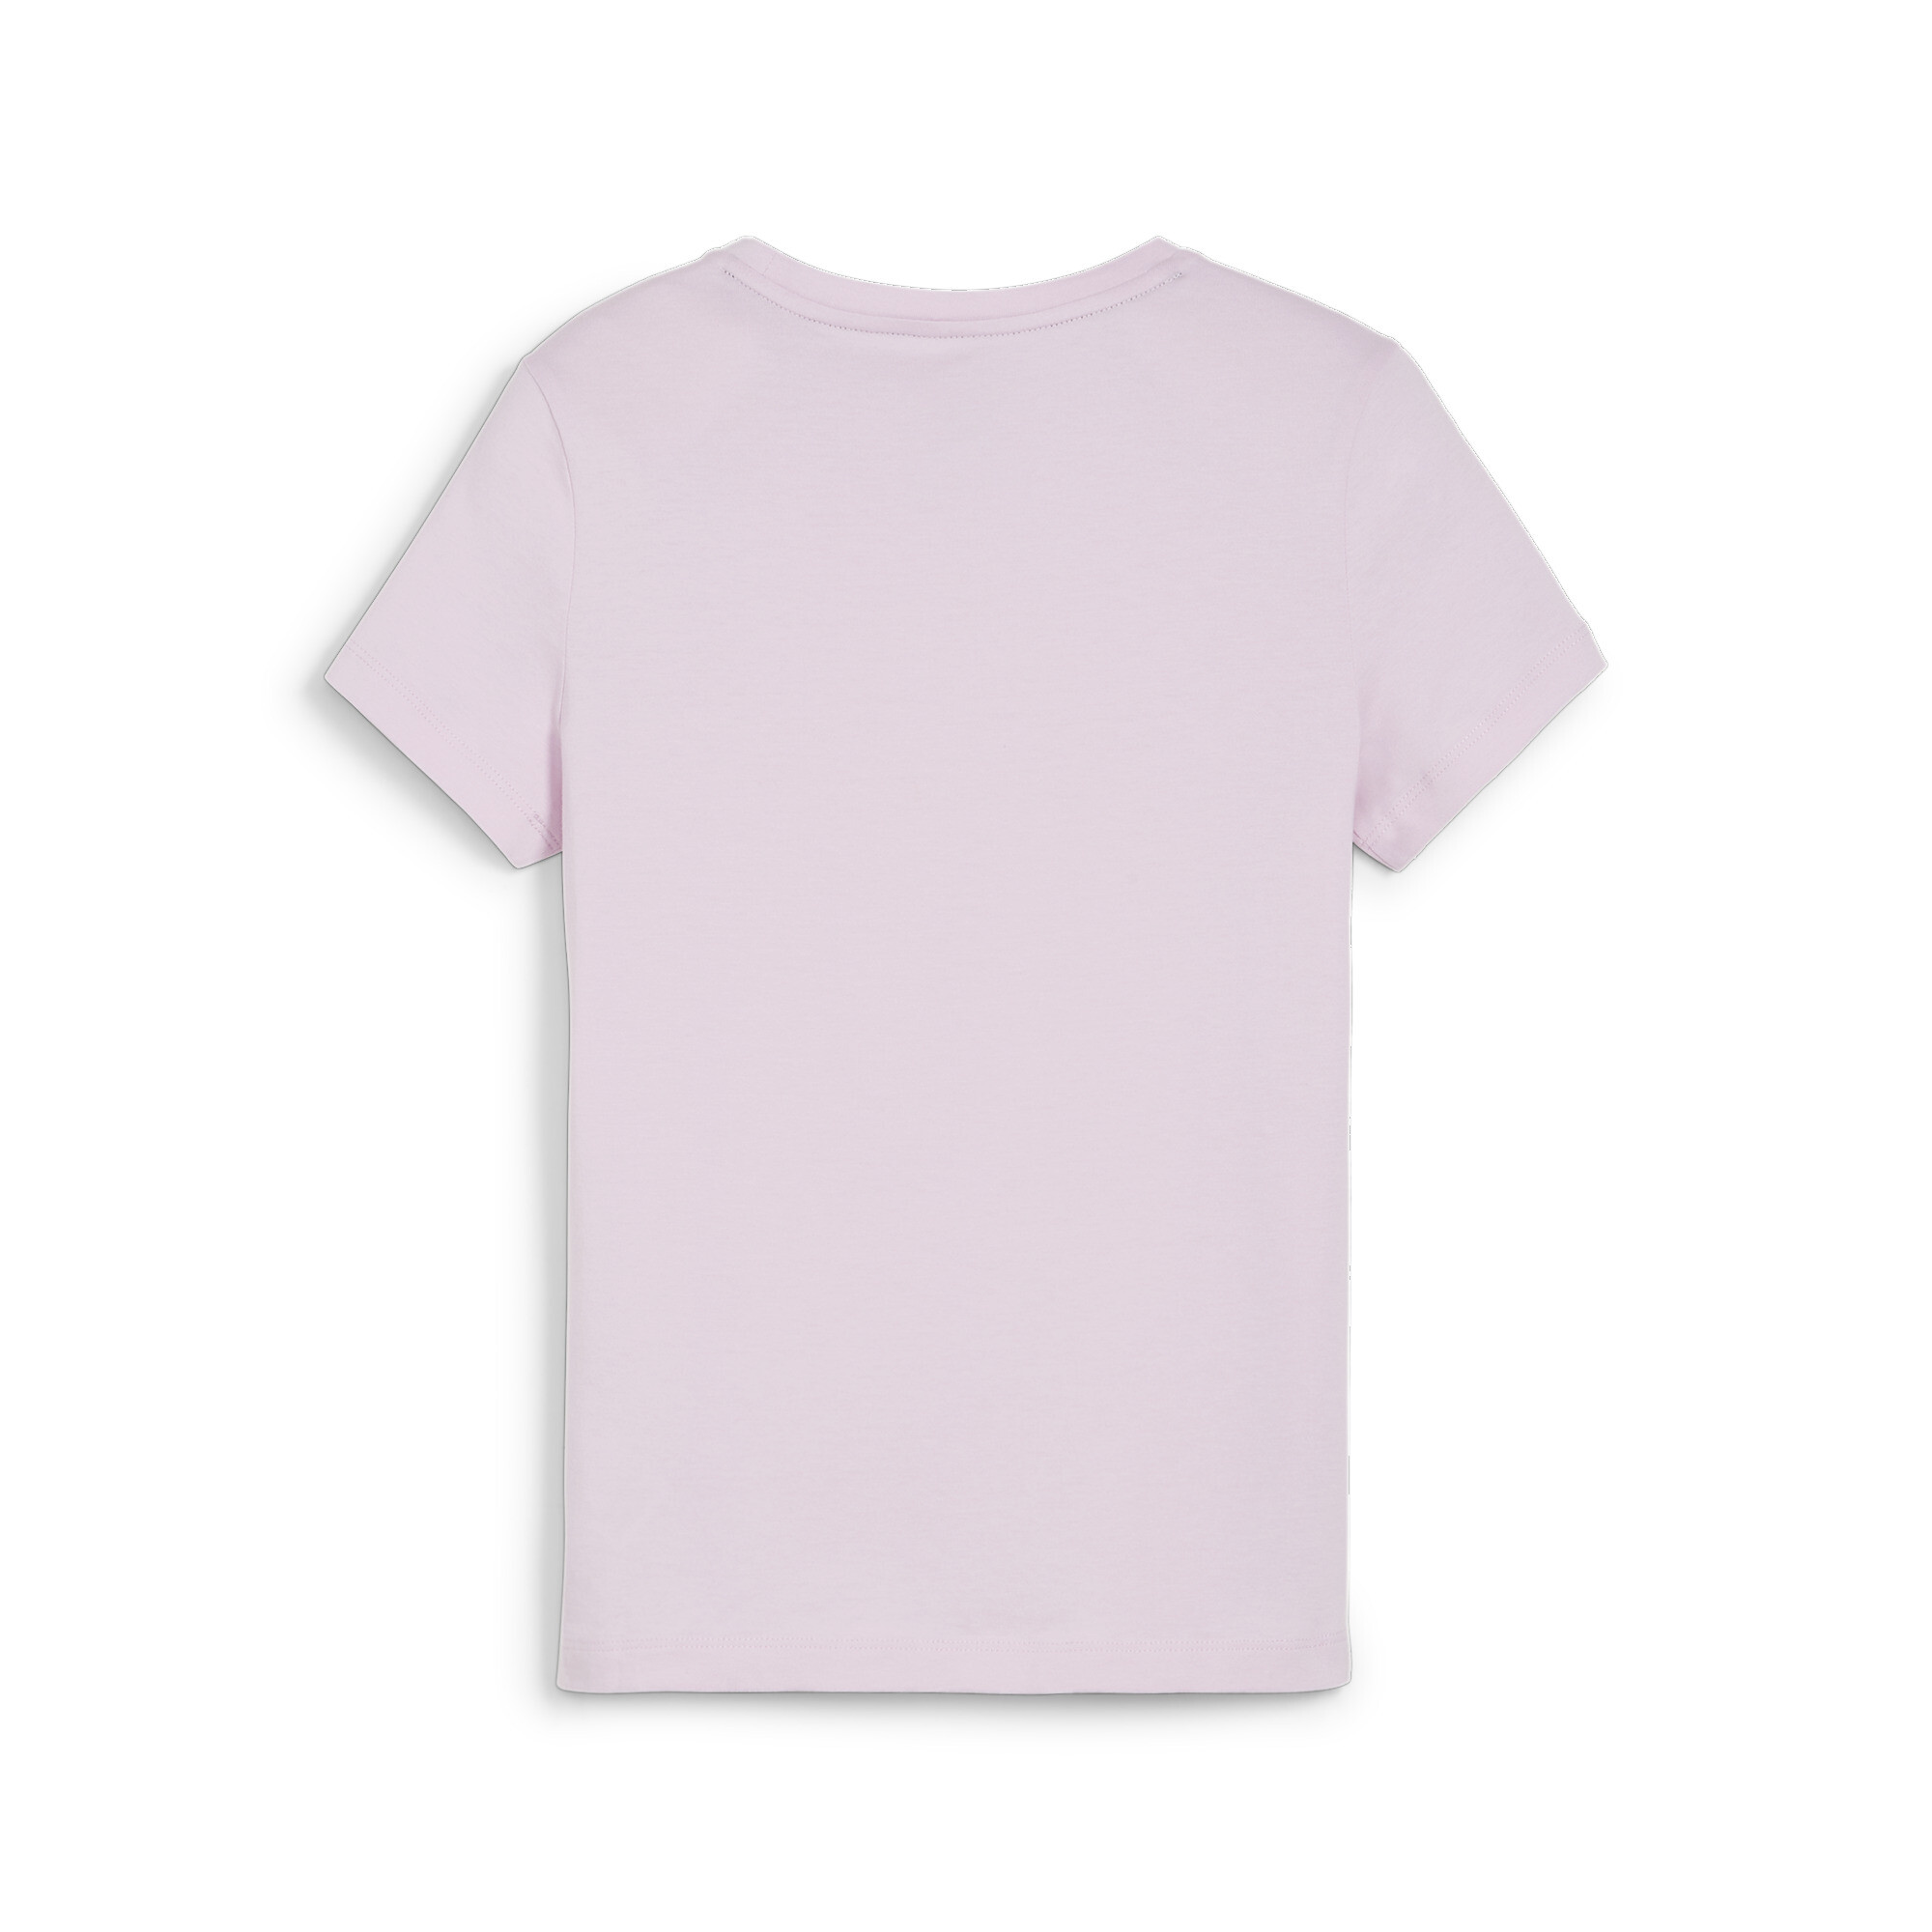 PUMA Essentials Logo T-Shirt In Purple, Size 7-8 Youth